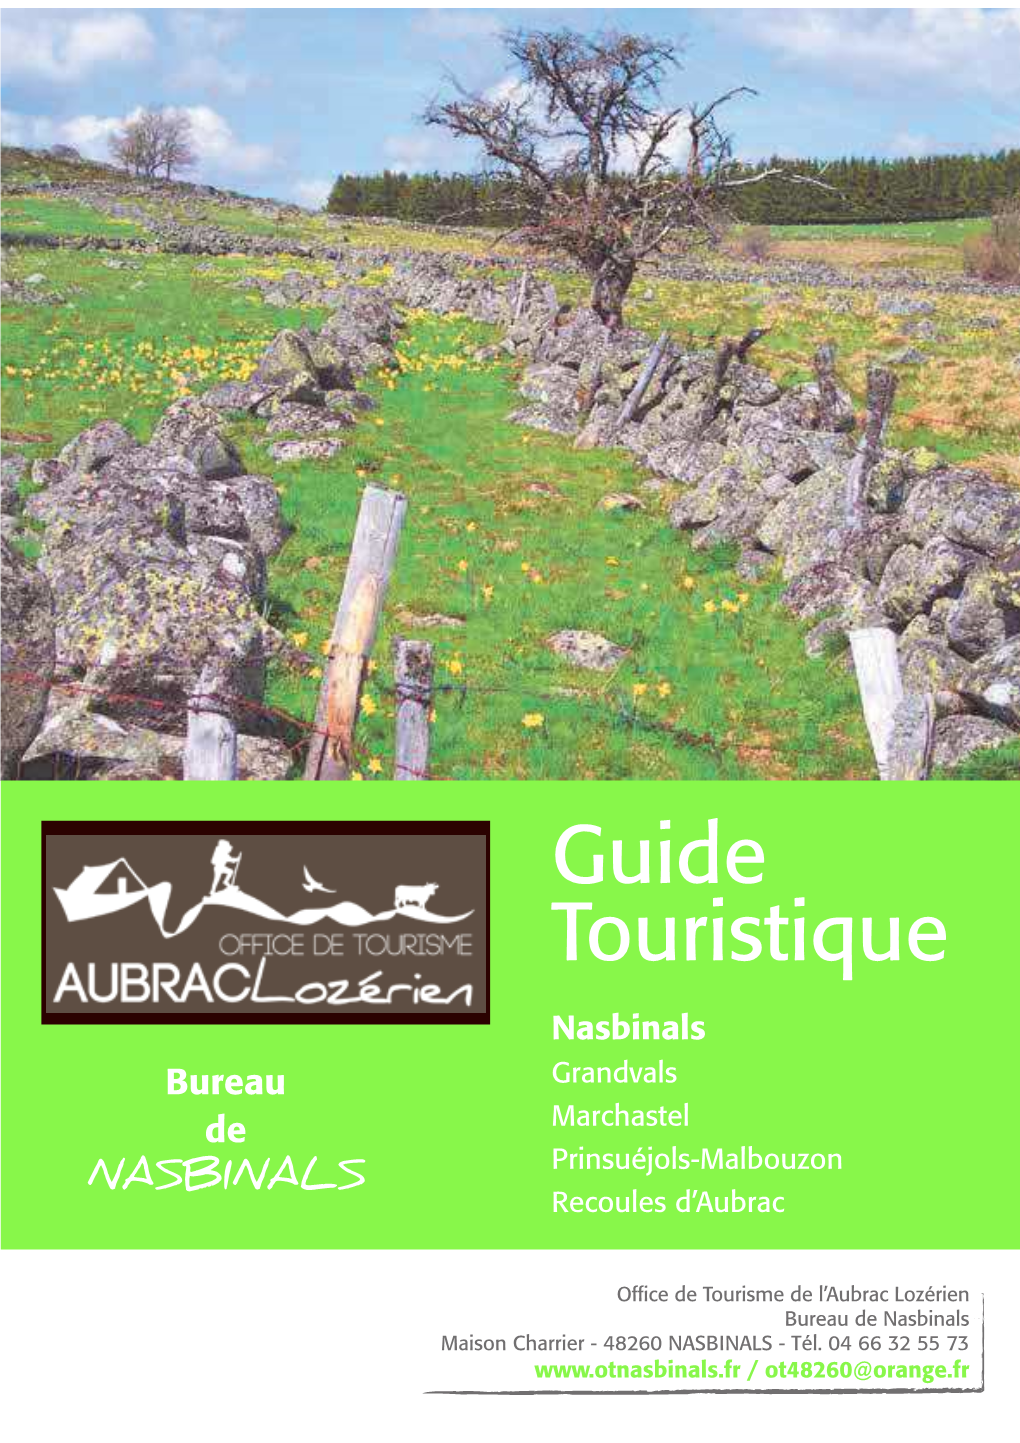 OT DE NASBINALS Guide Touristique 2019-2019020001